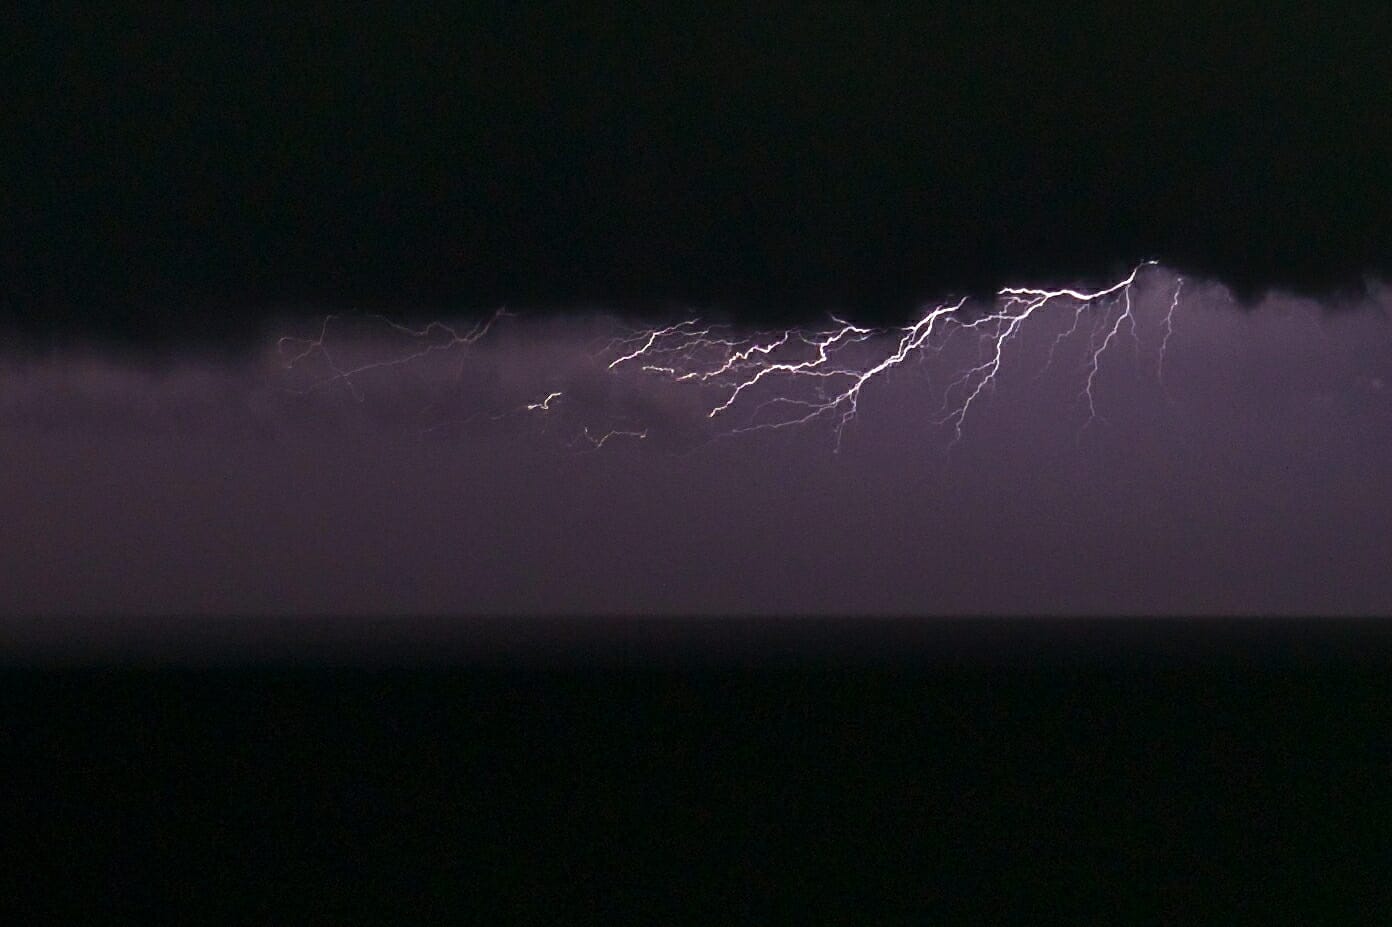 lightning at night on the horizon